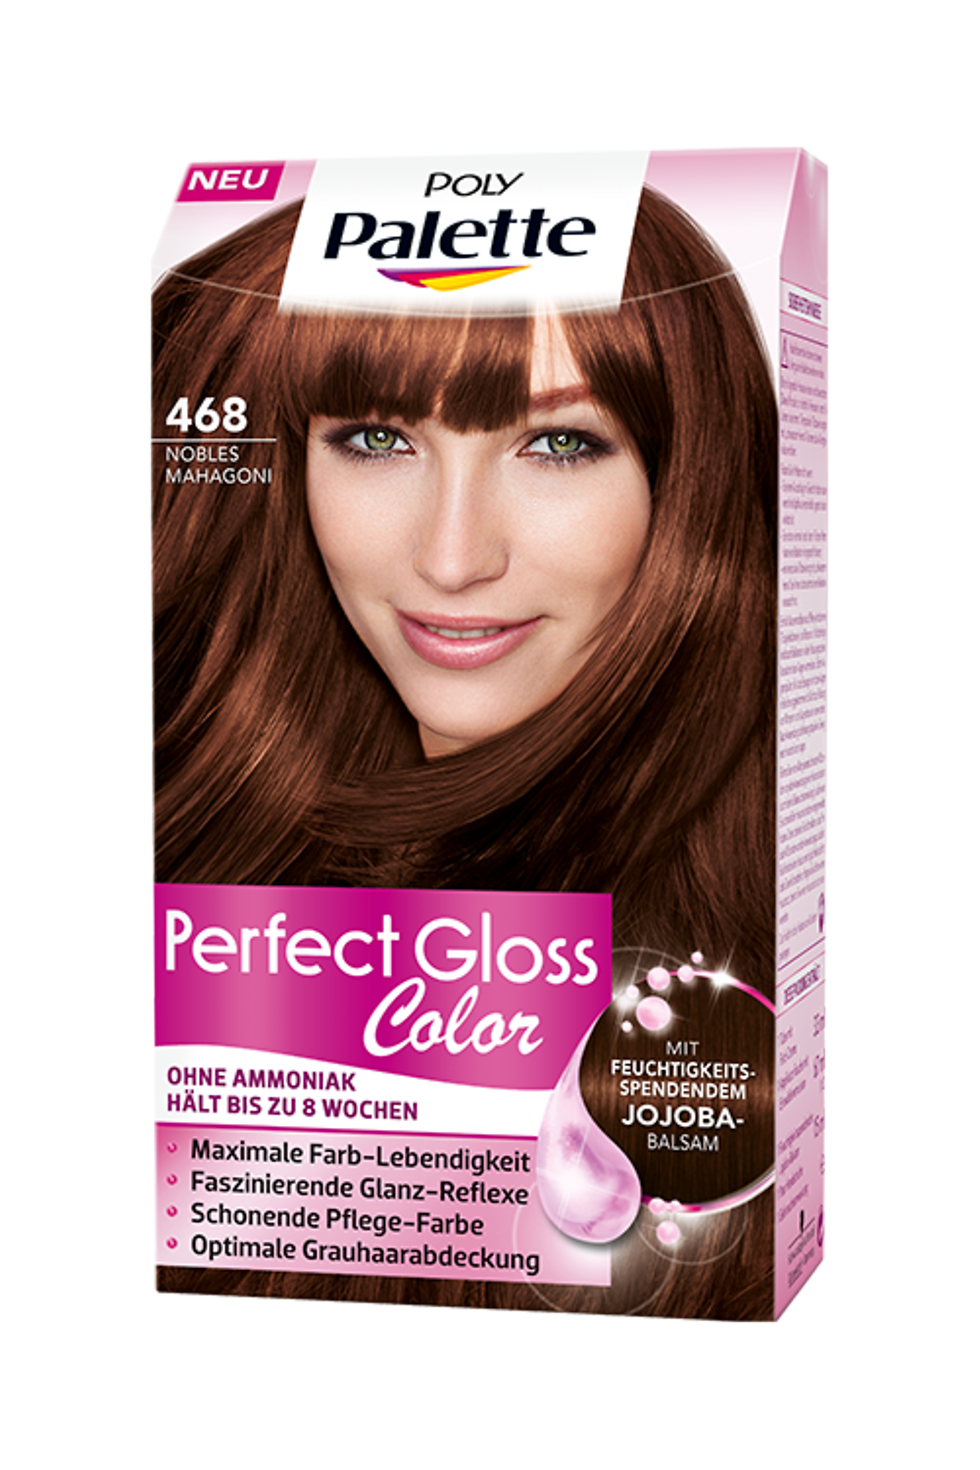 Poly Palette Perfect Gloss 468 Nobles Mahagoni